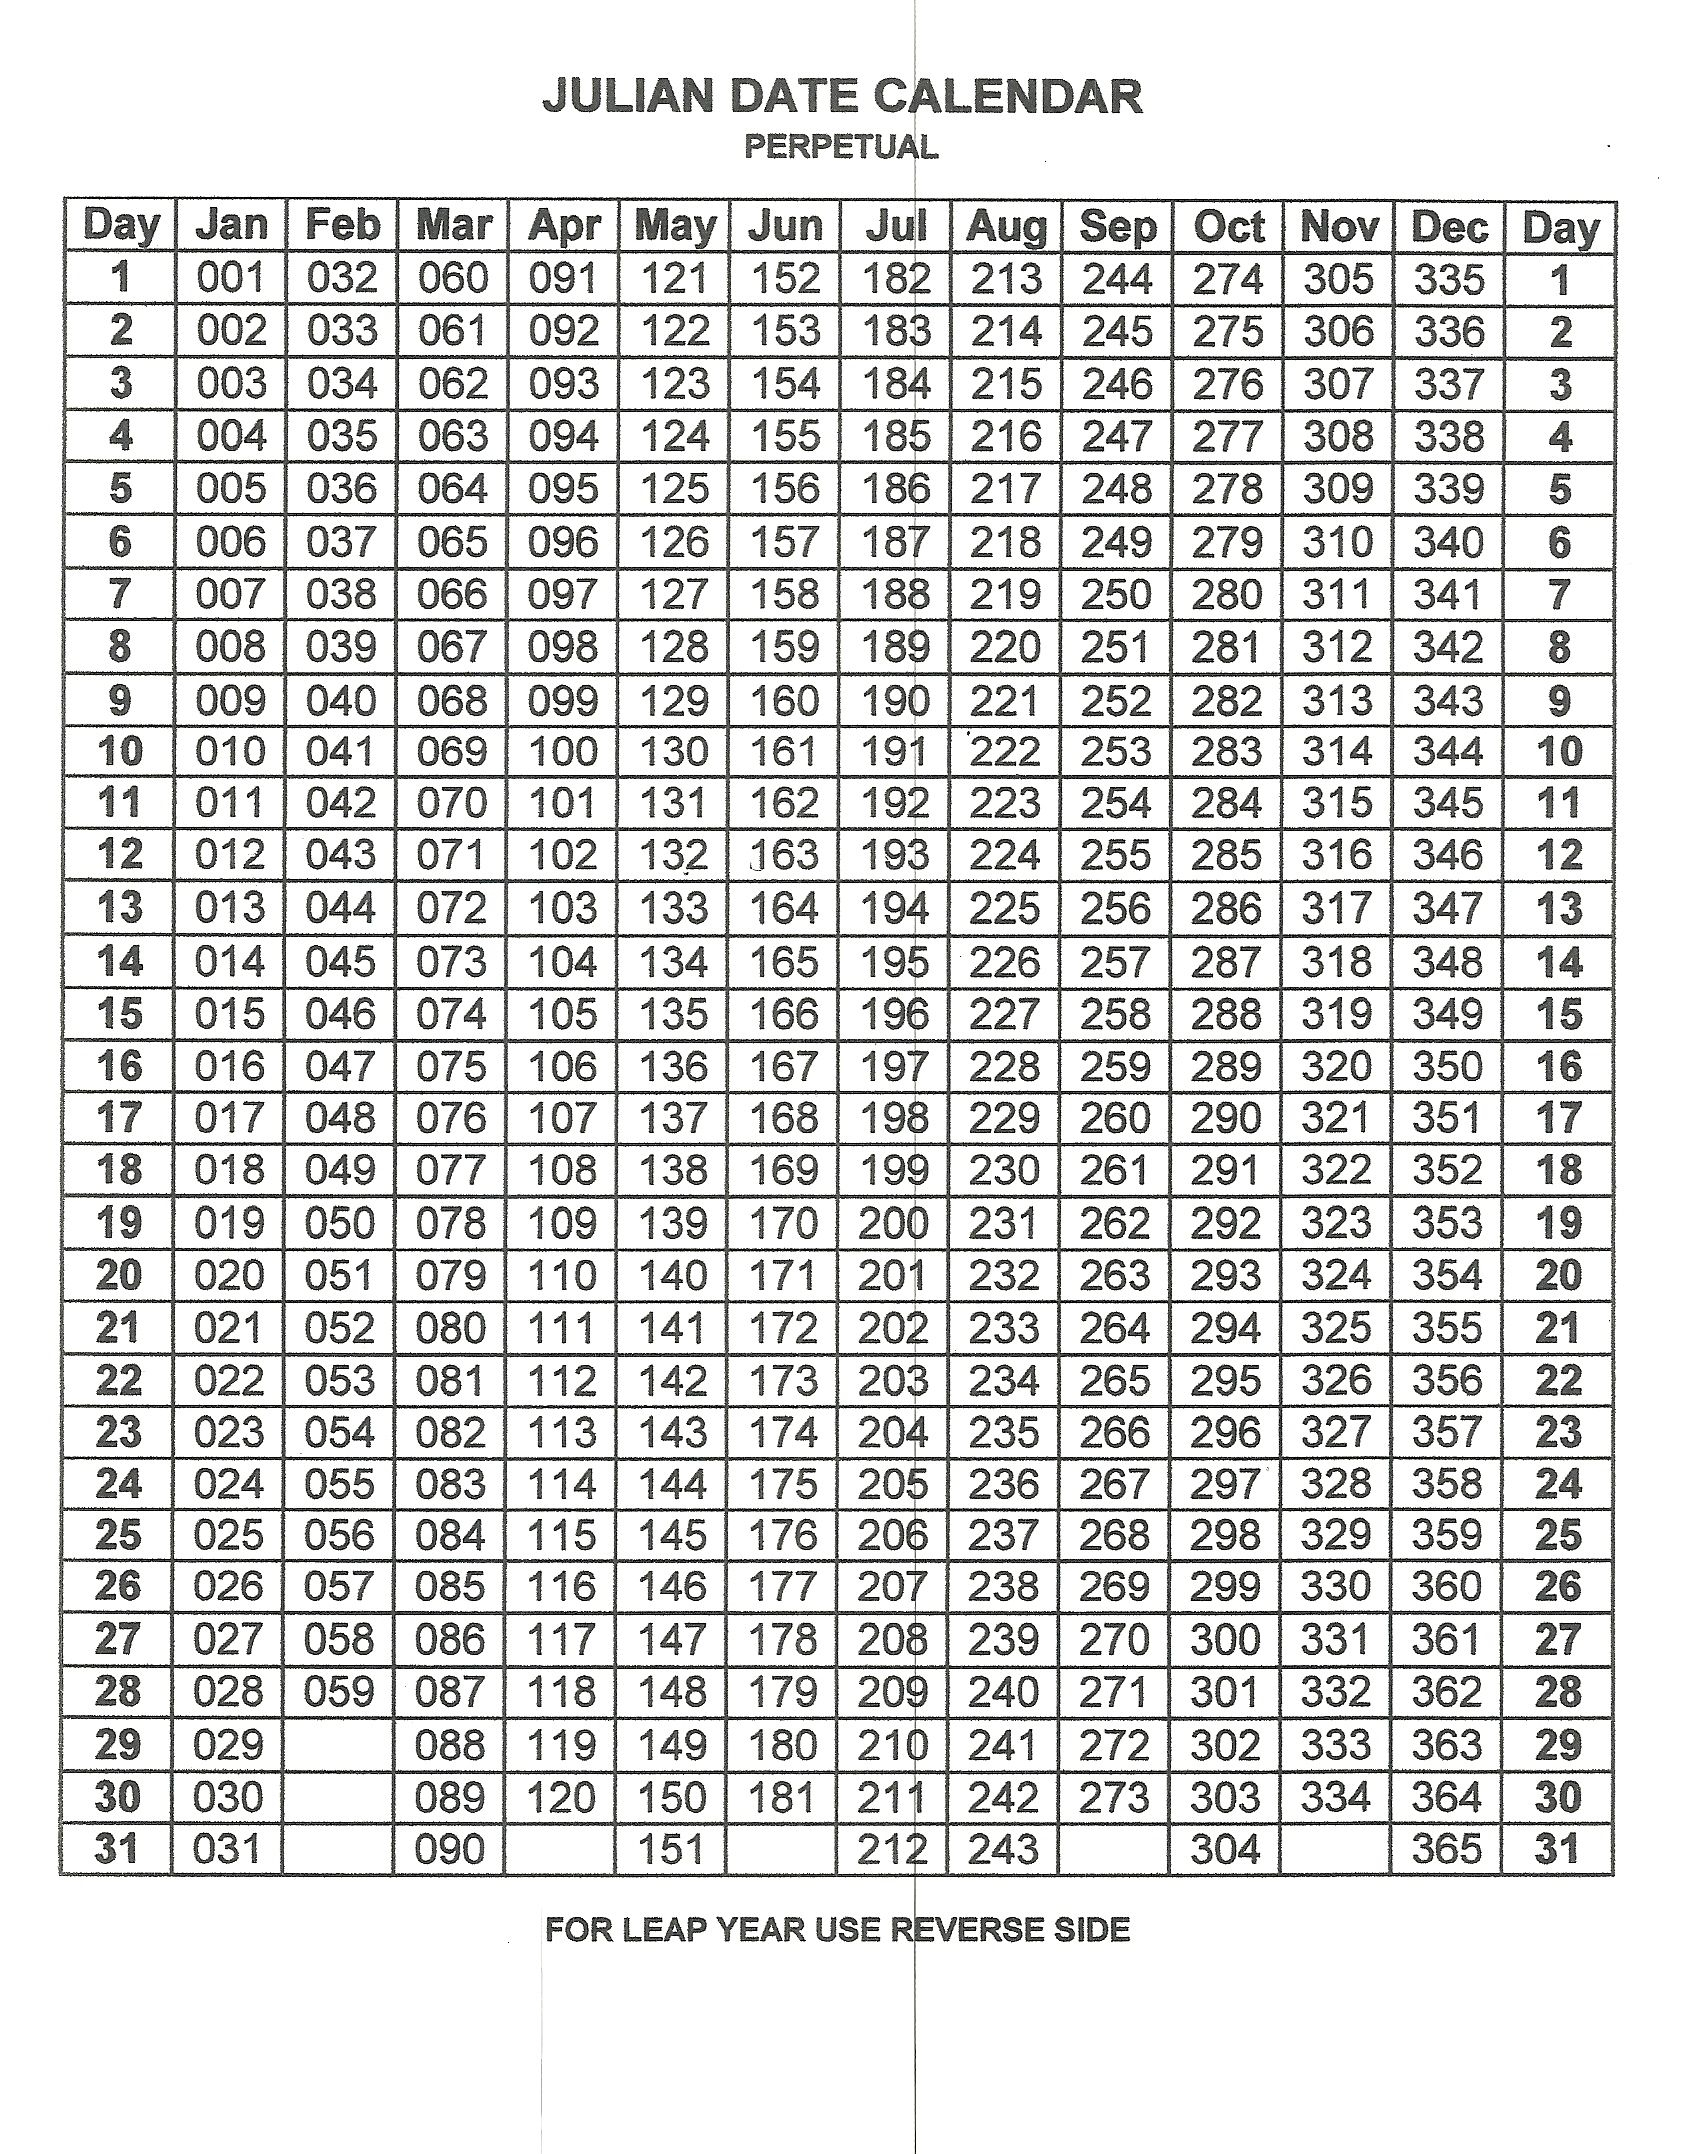 Perpetual Julian Date Calendar | Julian Dates, Calendar throughout Printable Julian Date Calendar